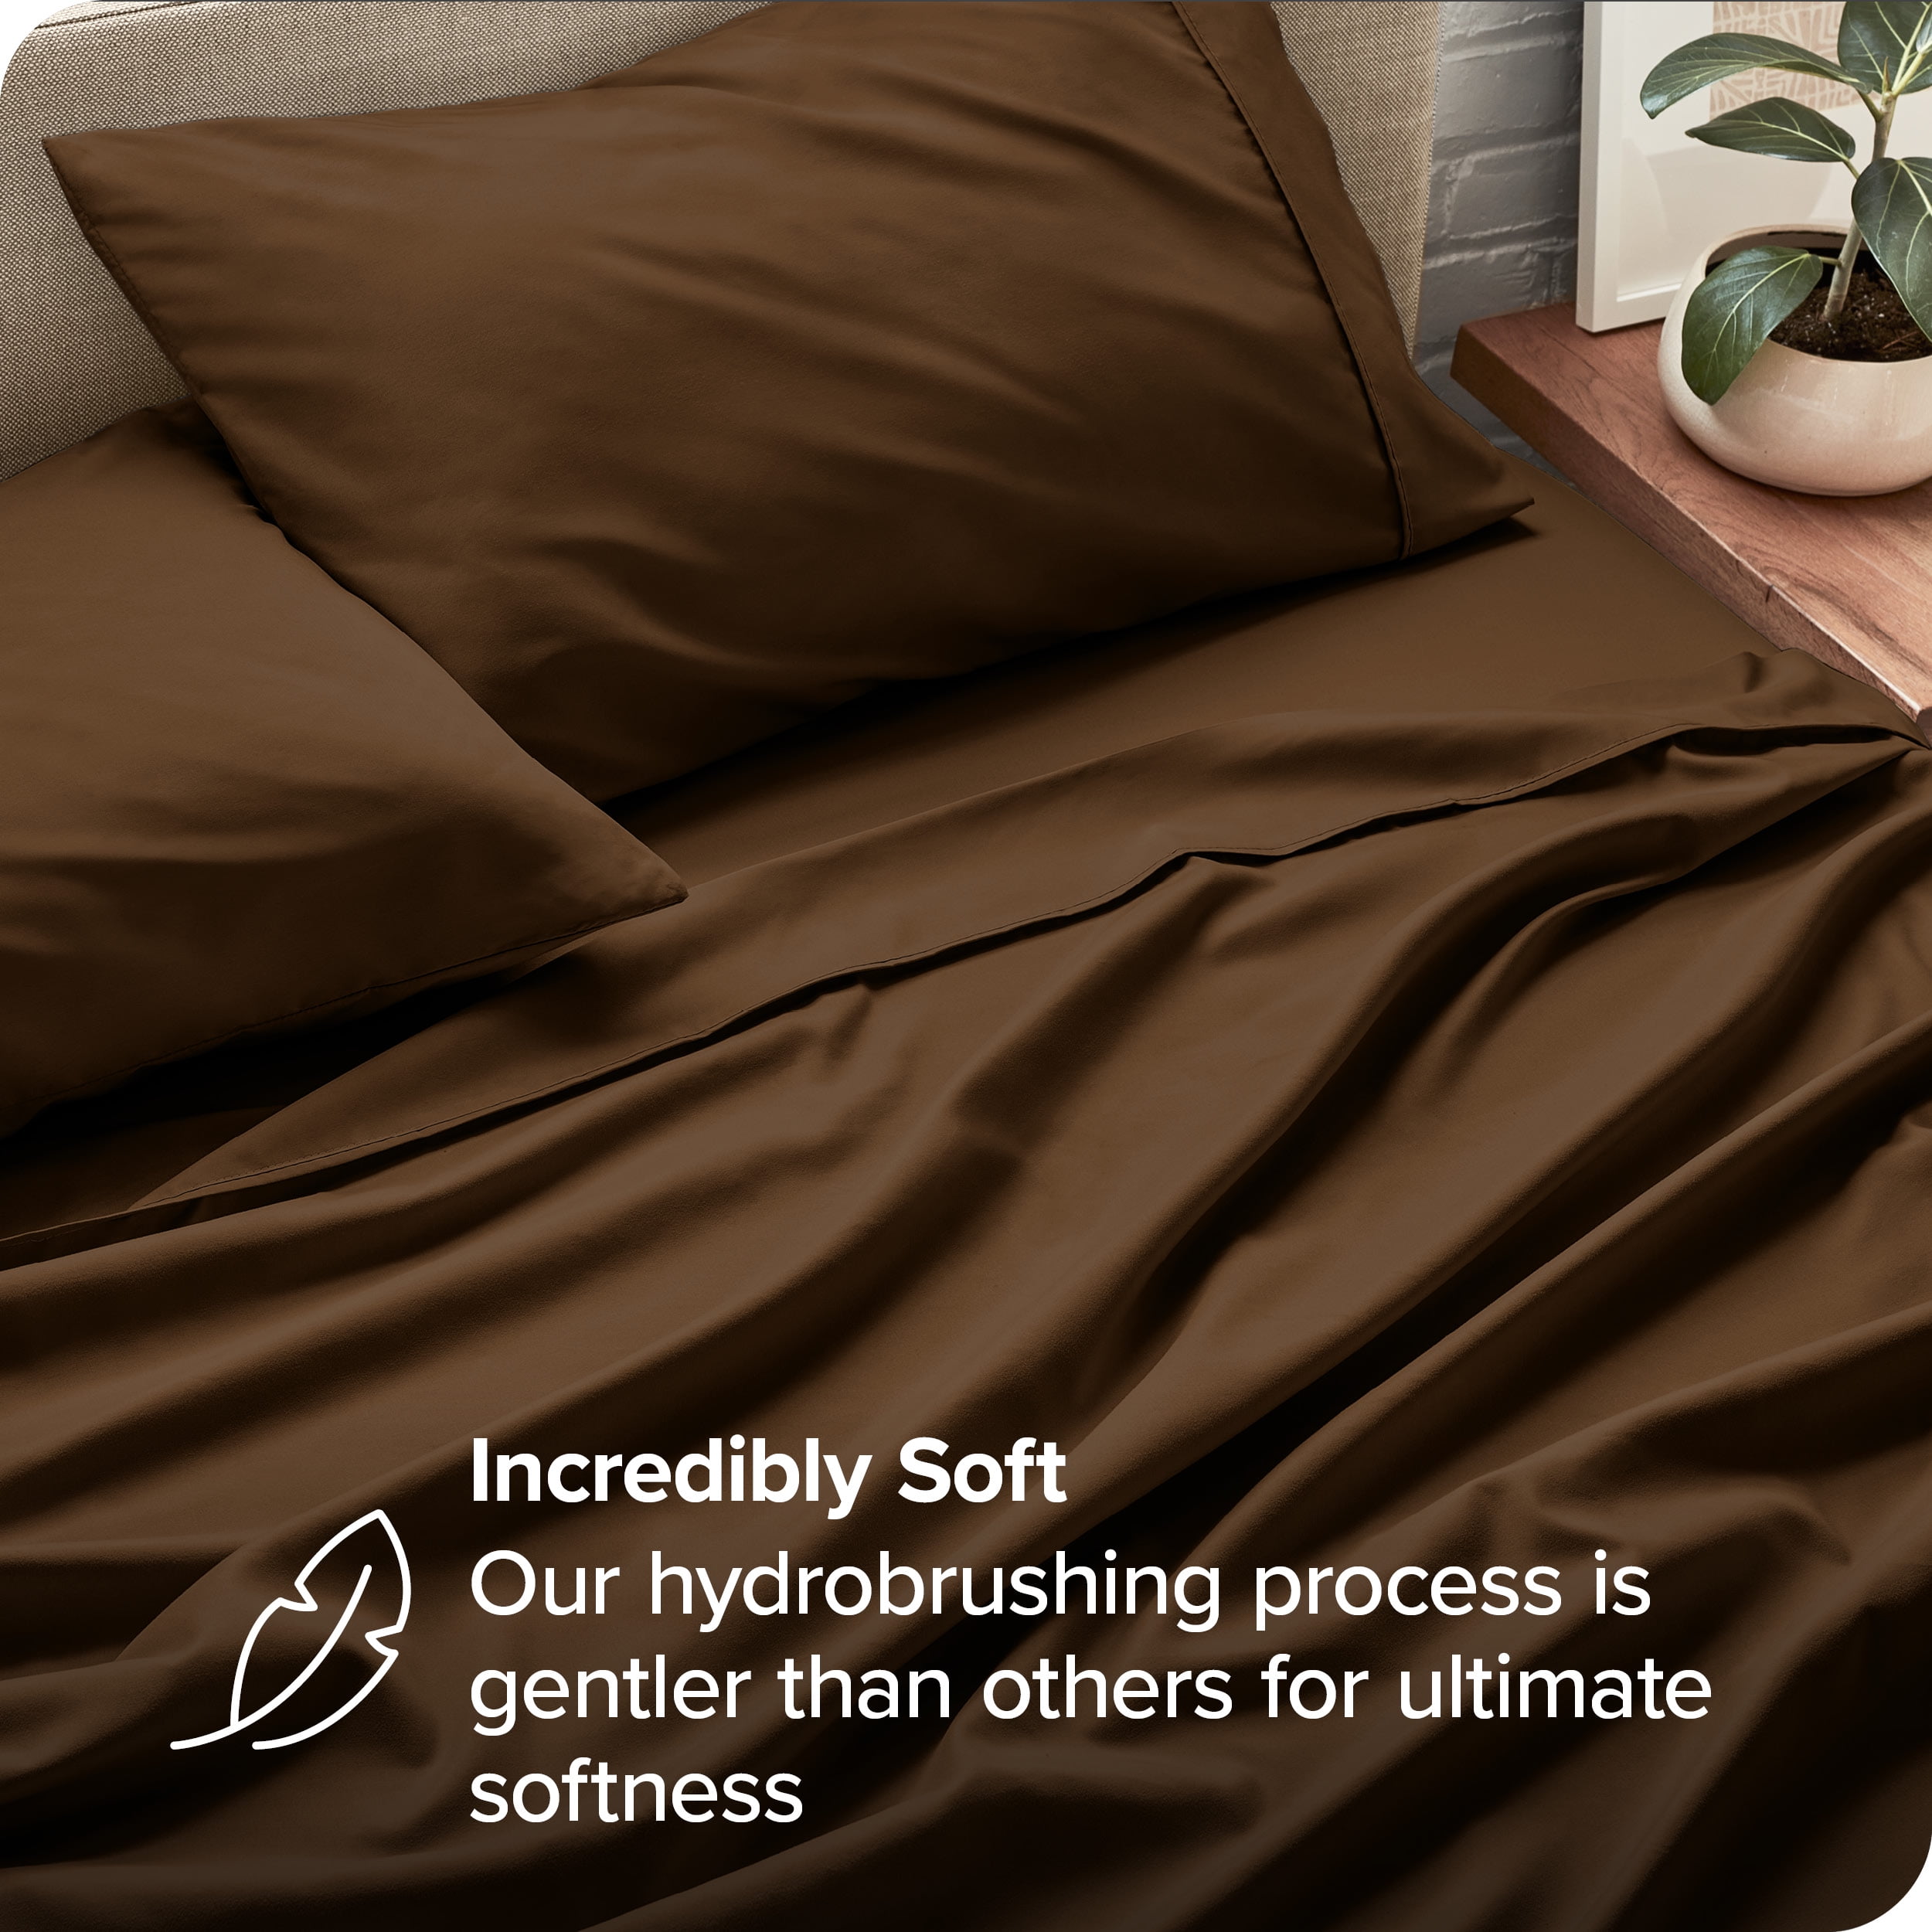 Bare Home Ultra-Soft Sheet Set - Premium 1800 Collection - Deep